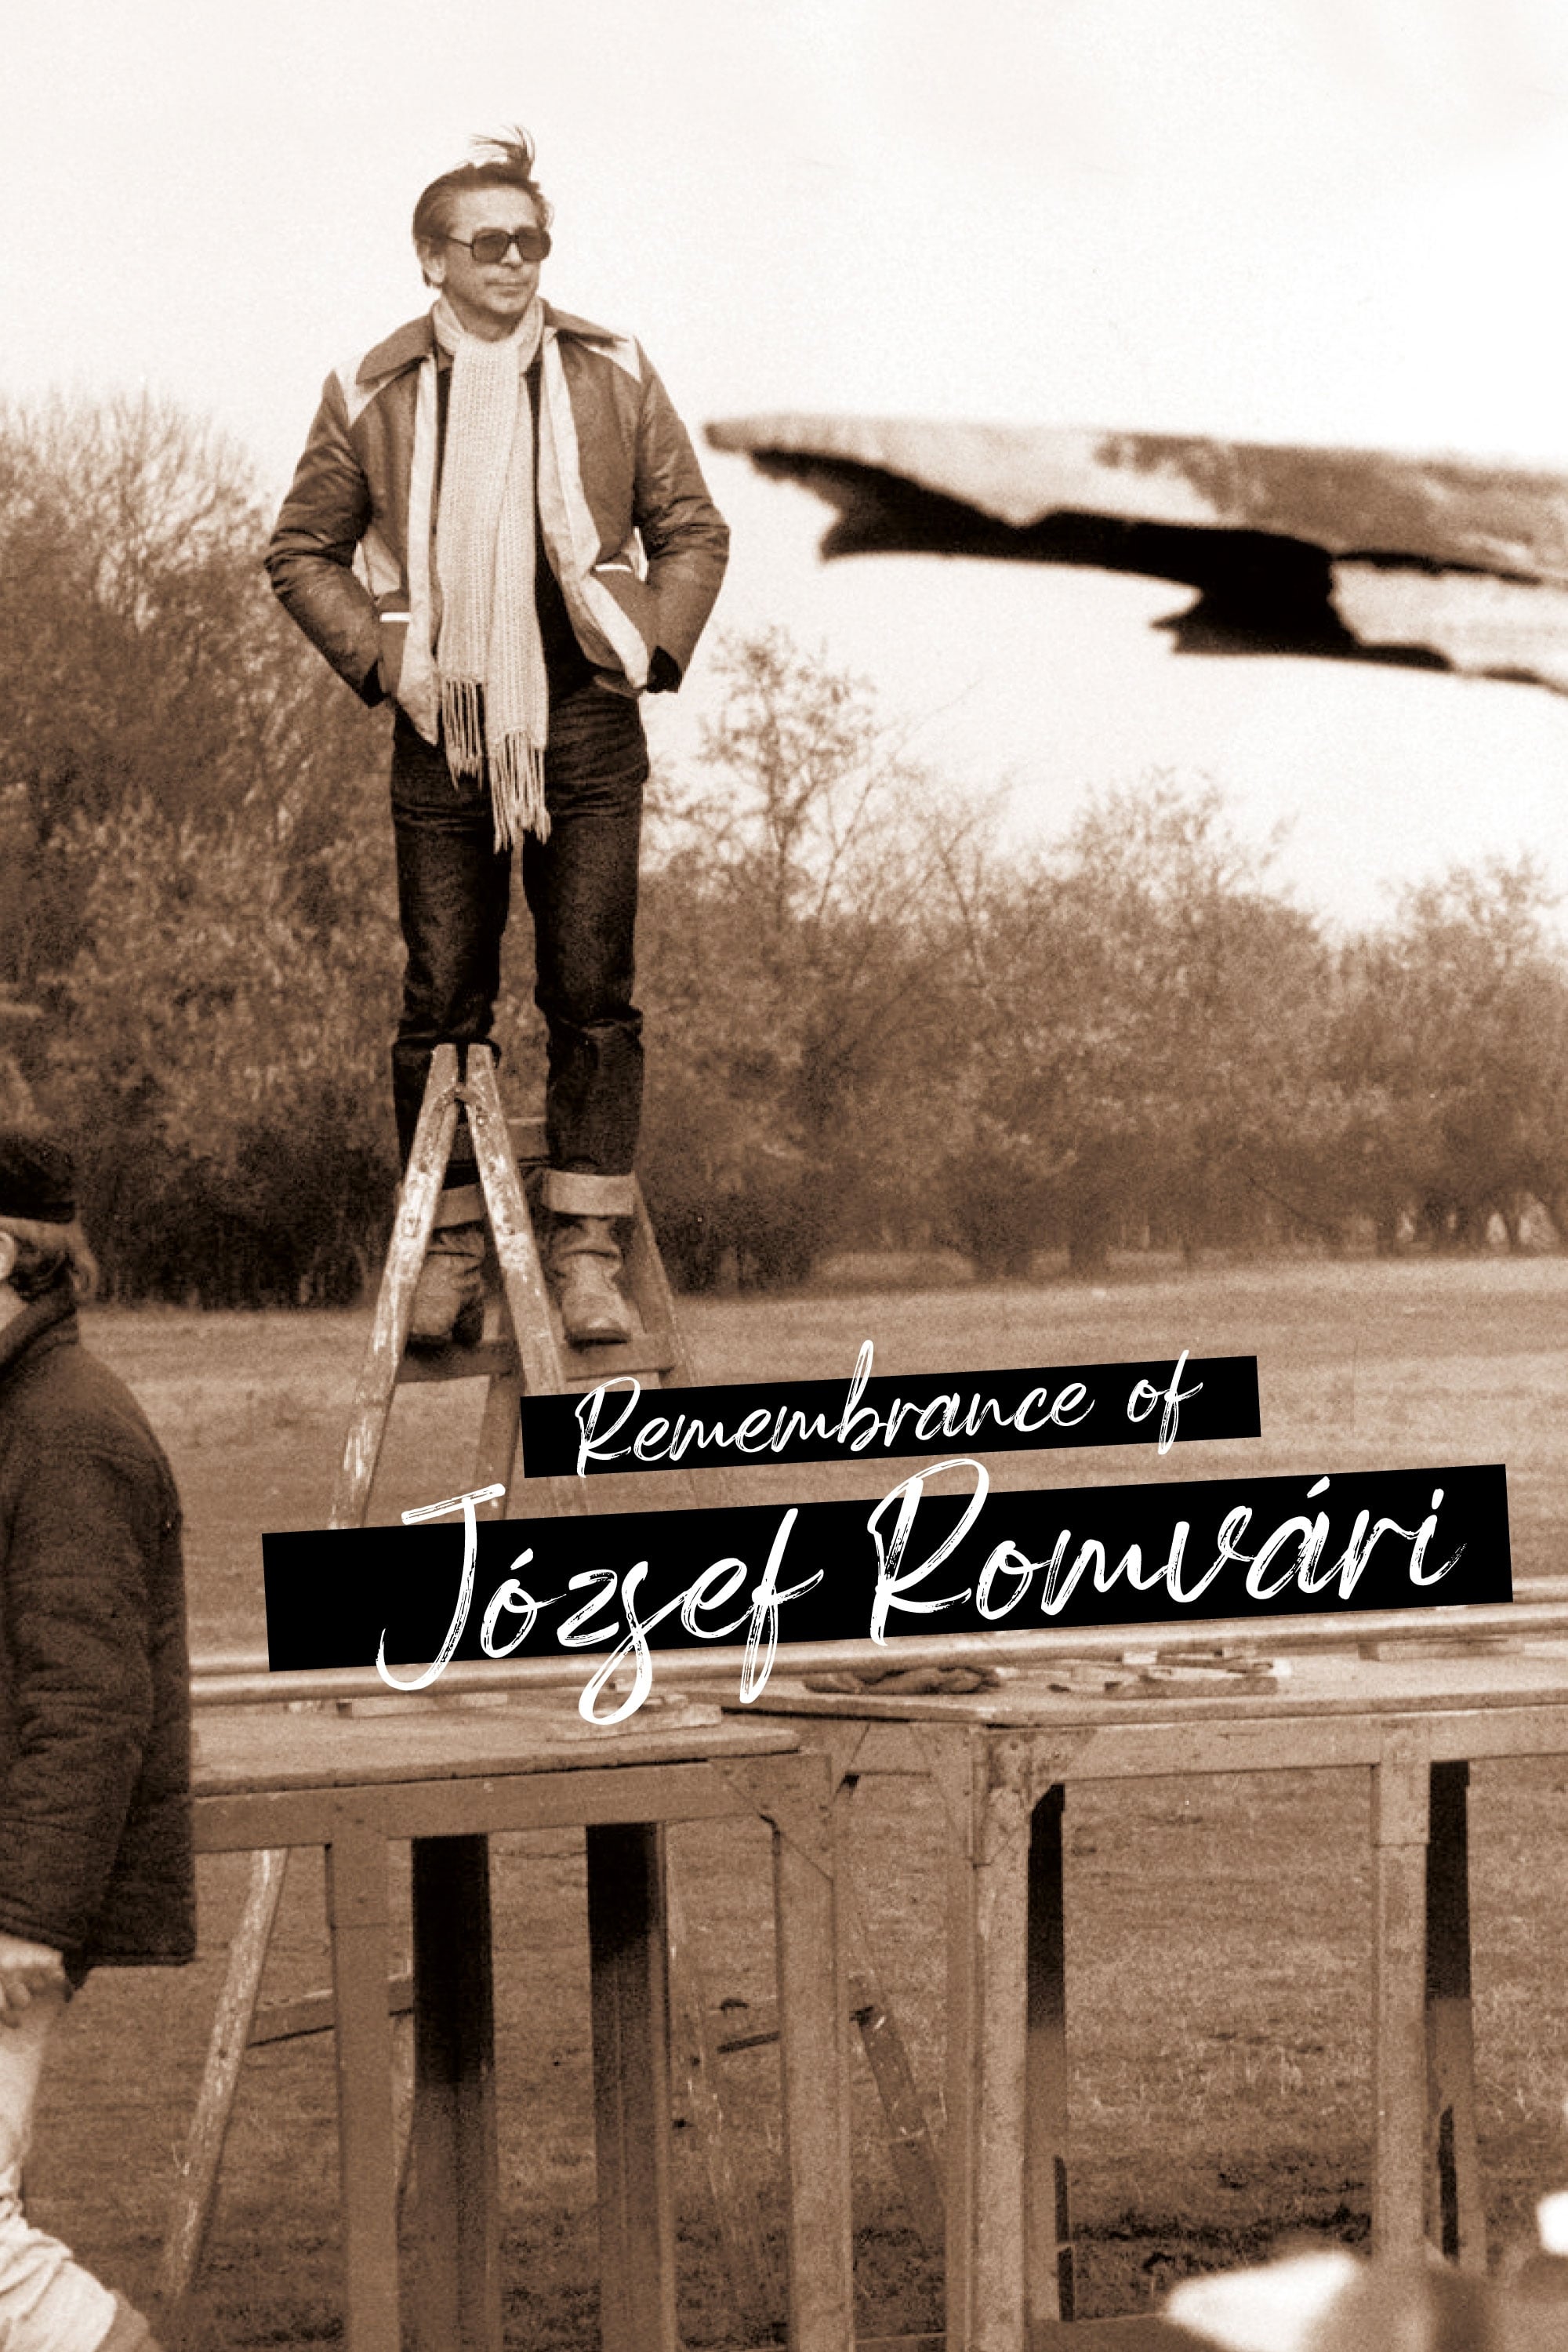 Remembrance of József Romvári